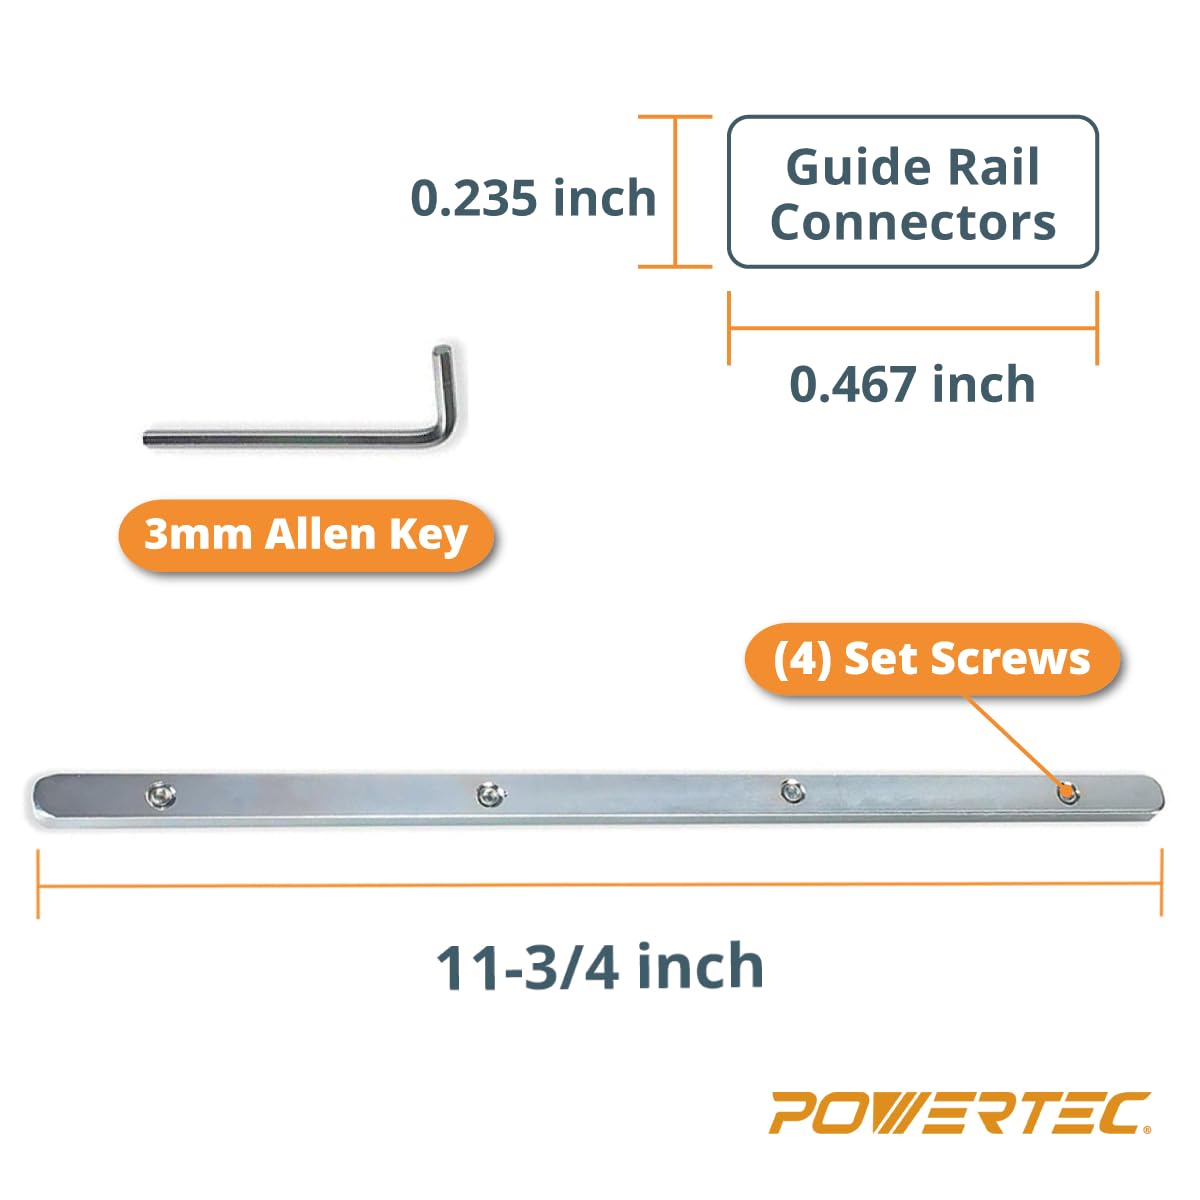 POWERTEC 71358 Track Saw Guide Rail Connector Set for Festool, Makita, DeWalt, and Triton | Pack of 2